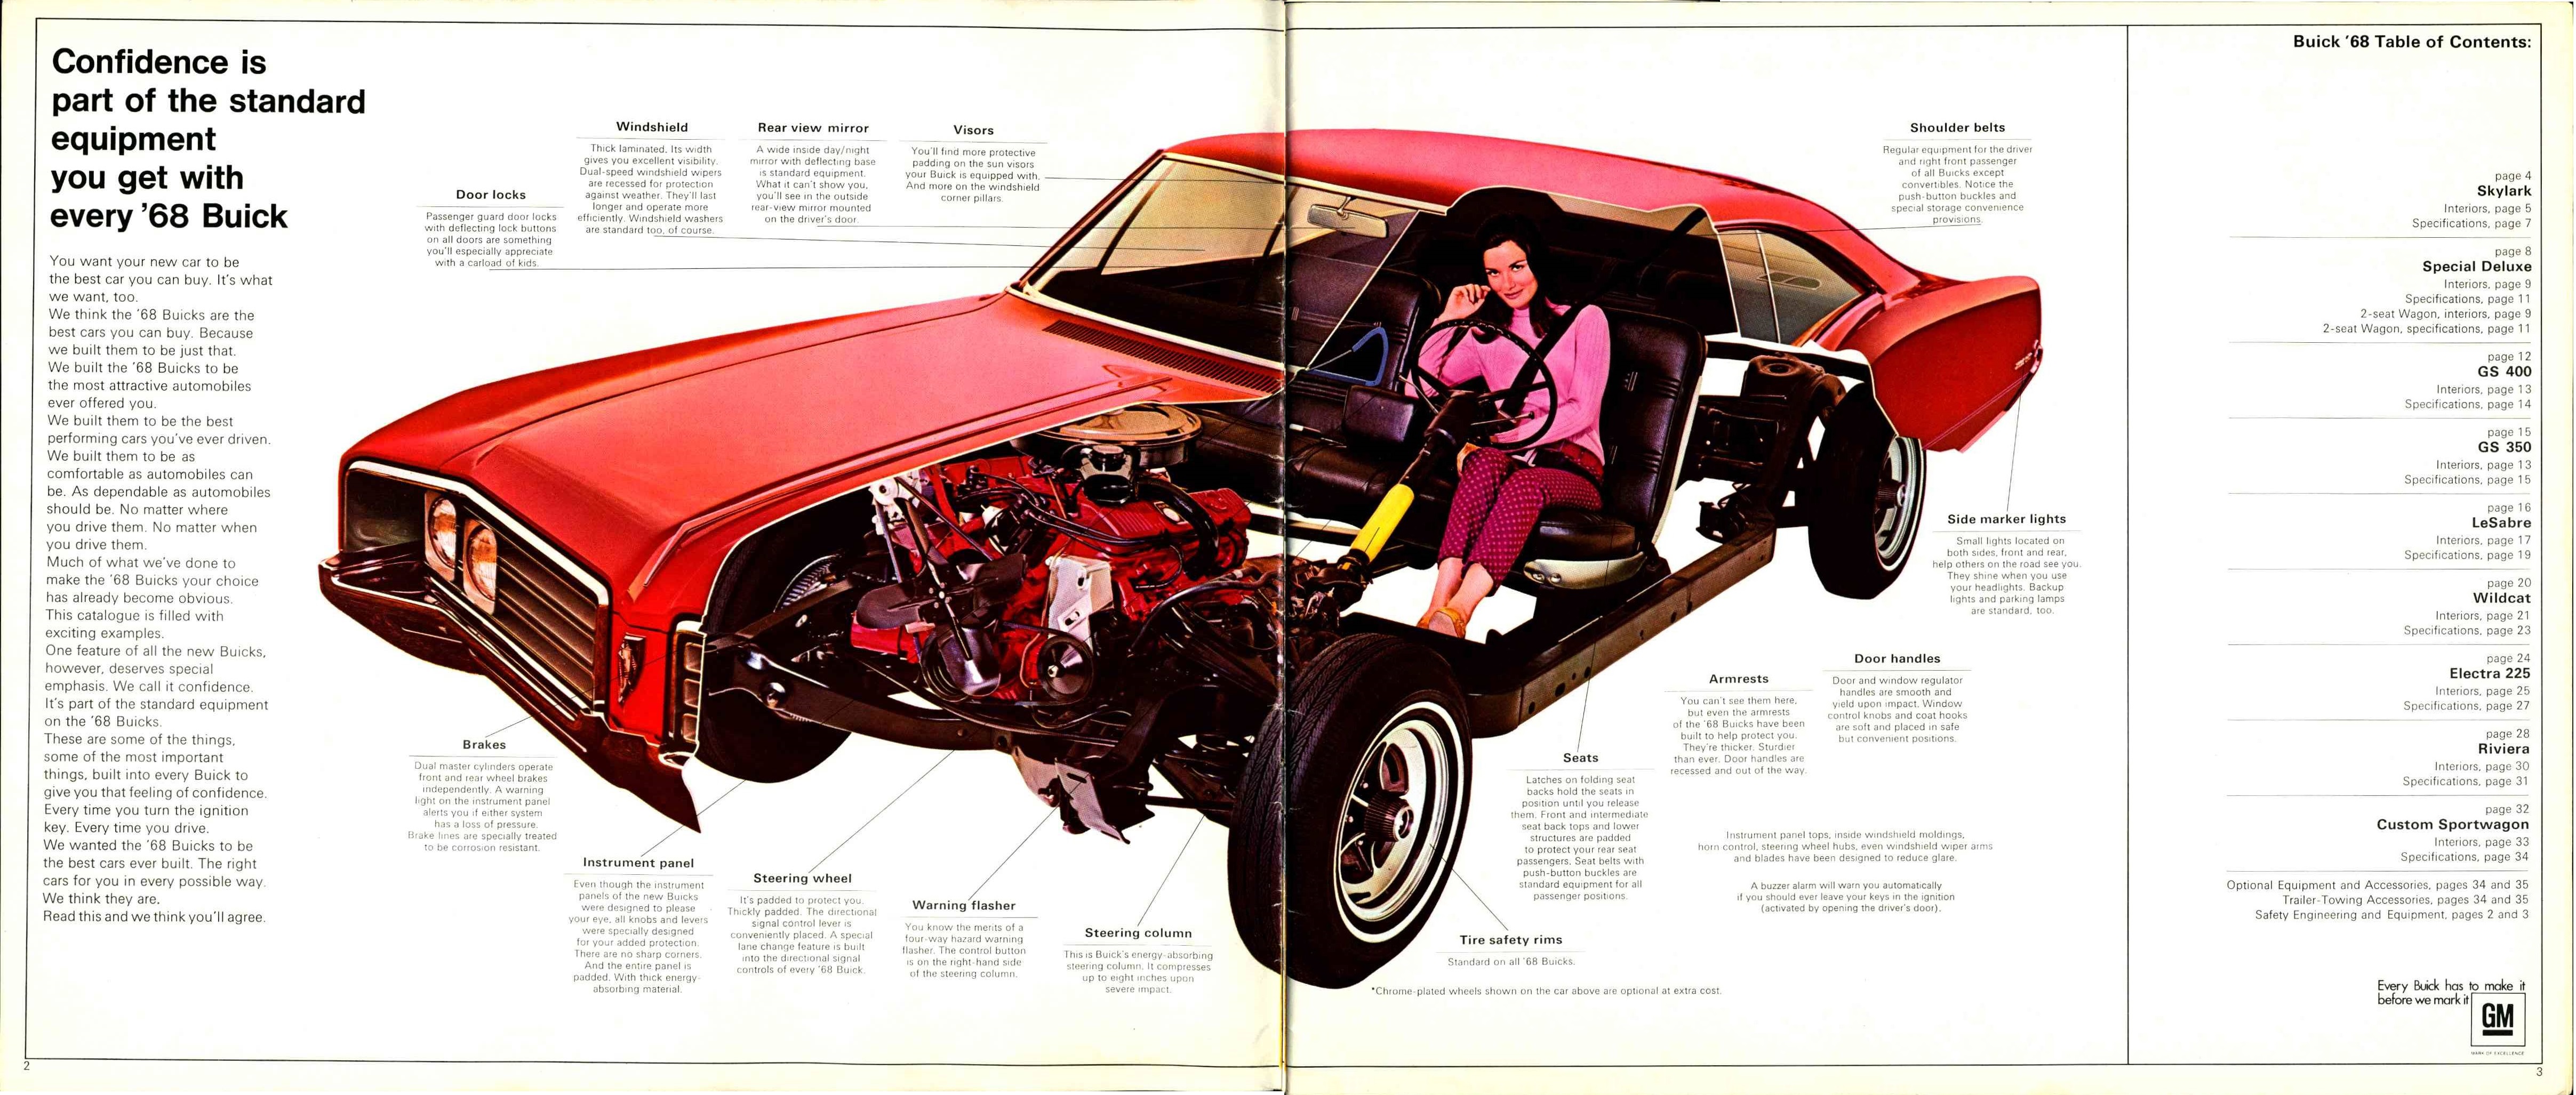 1968 Buick Full Line Brochure Canada 02-03